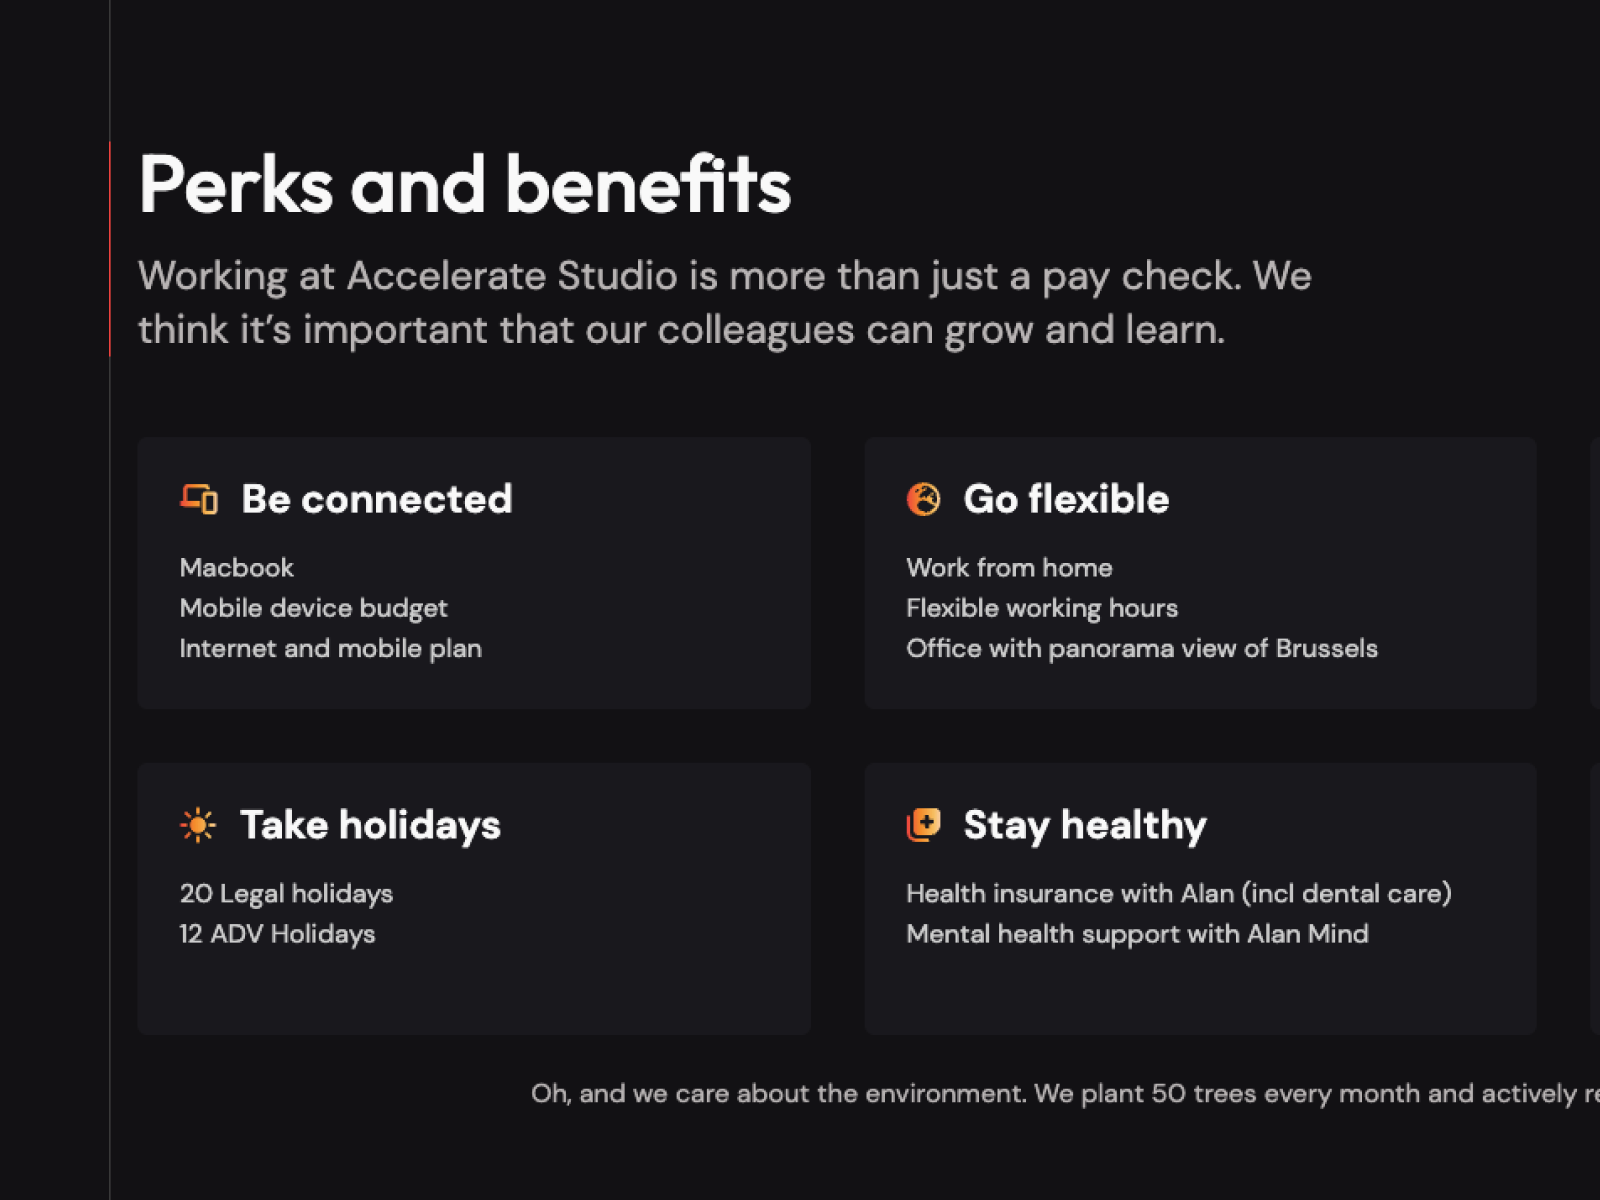 Perks & benefits